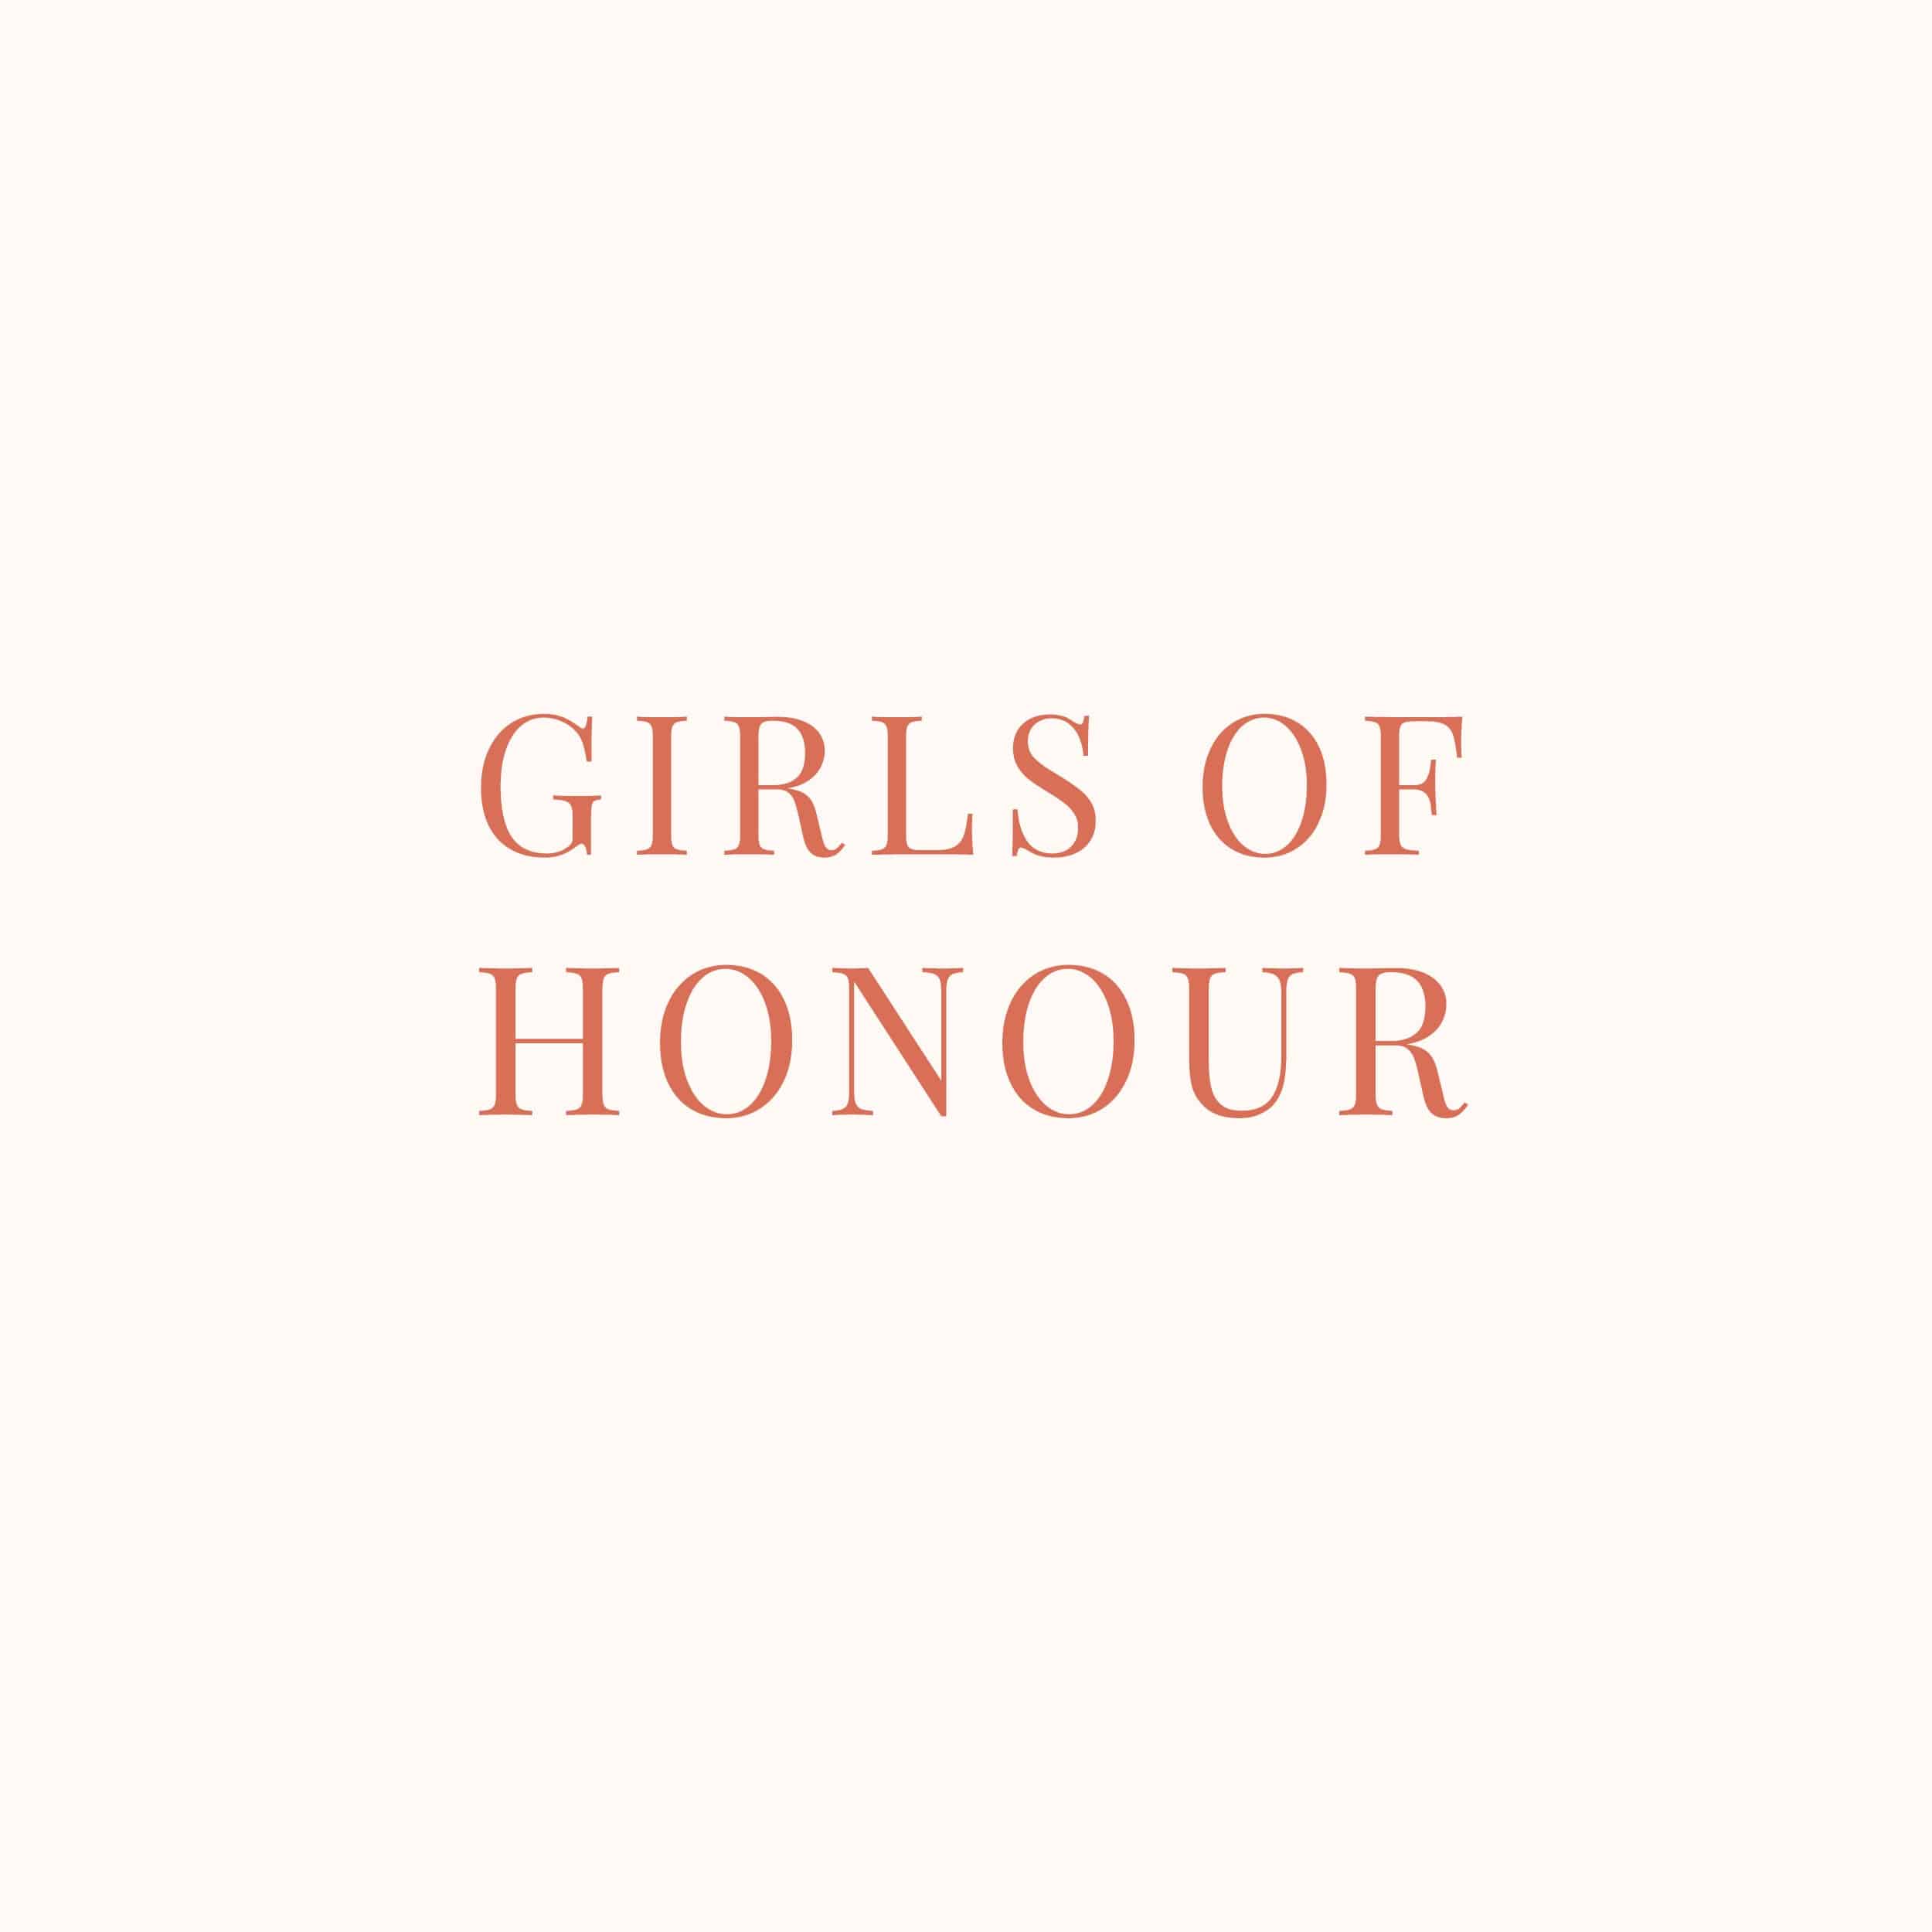 girls-of-honour